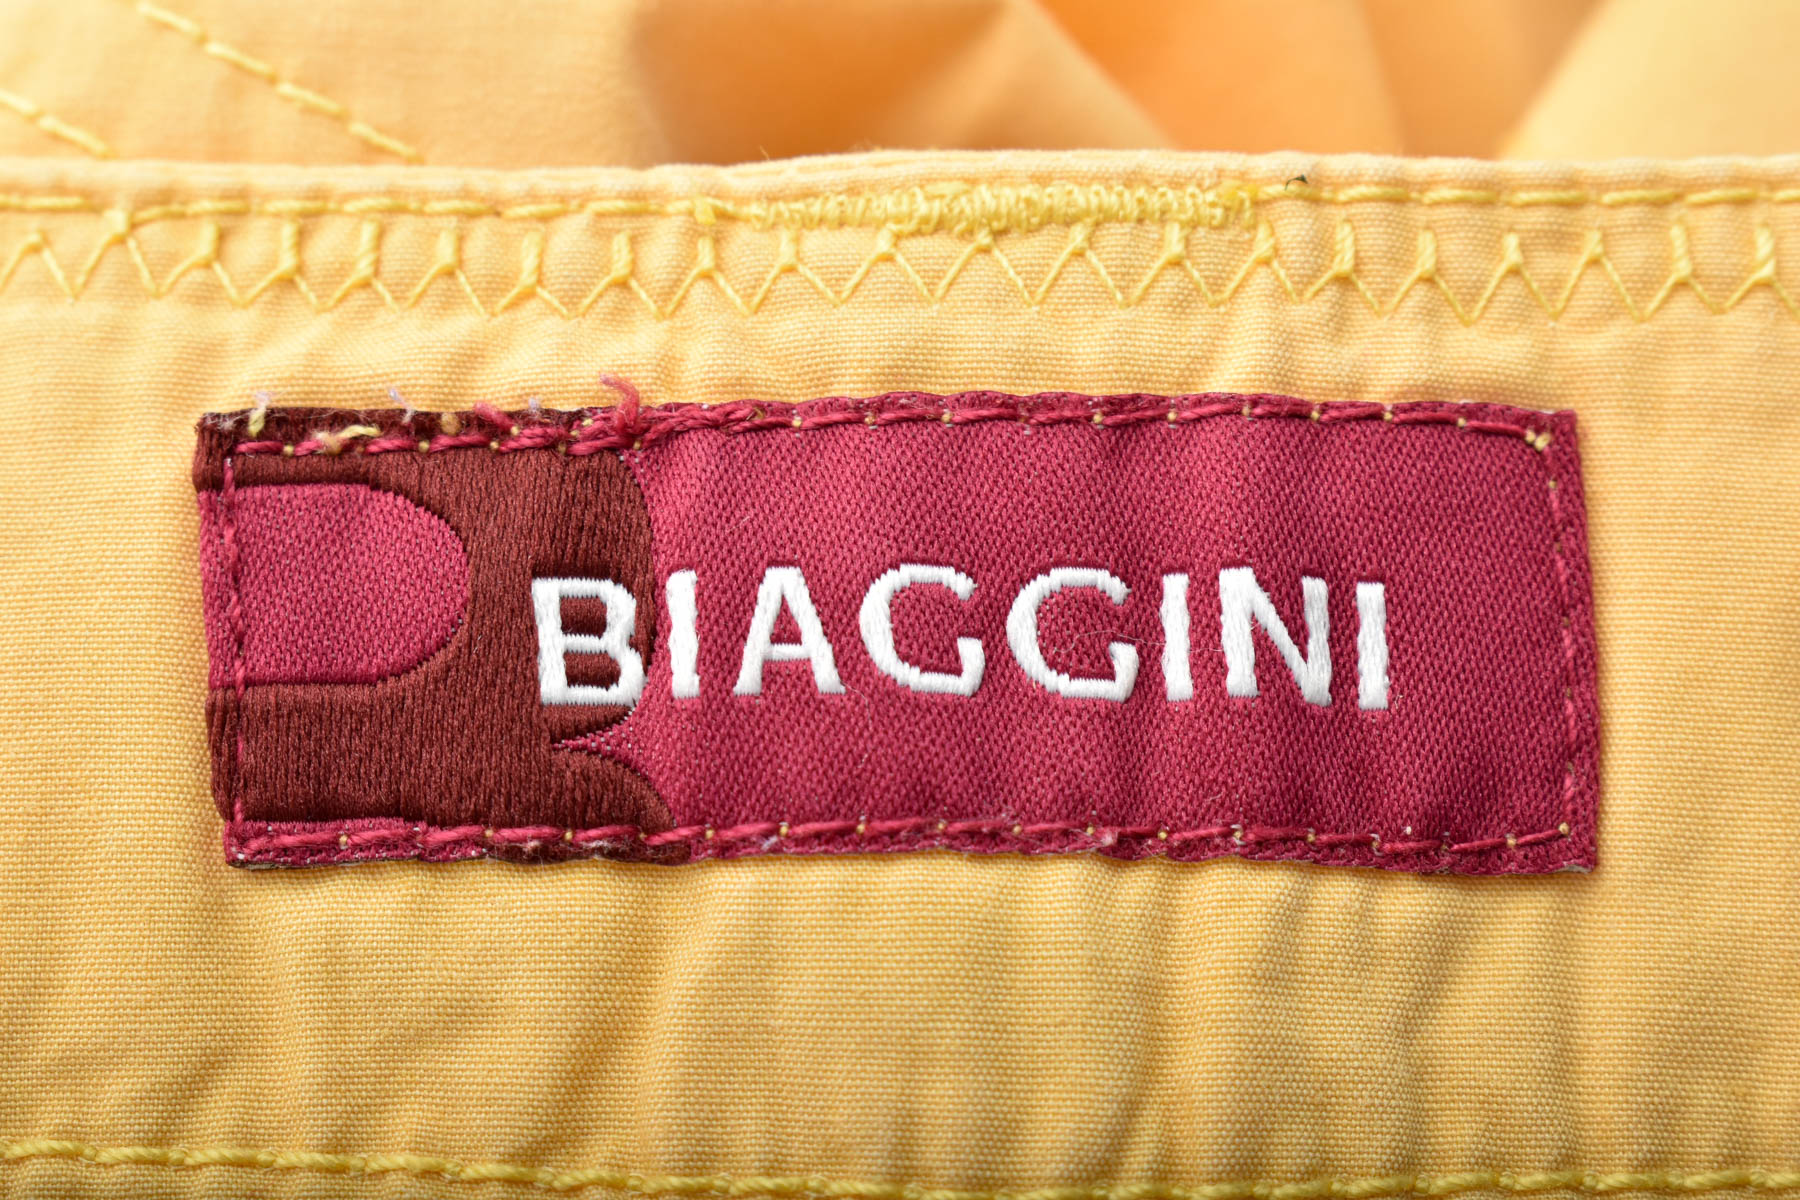 Female shorts - Biaggini - 2